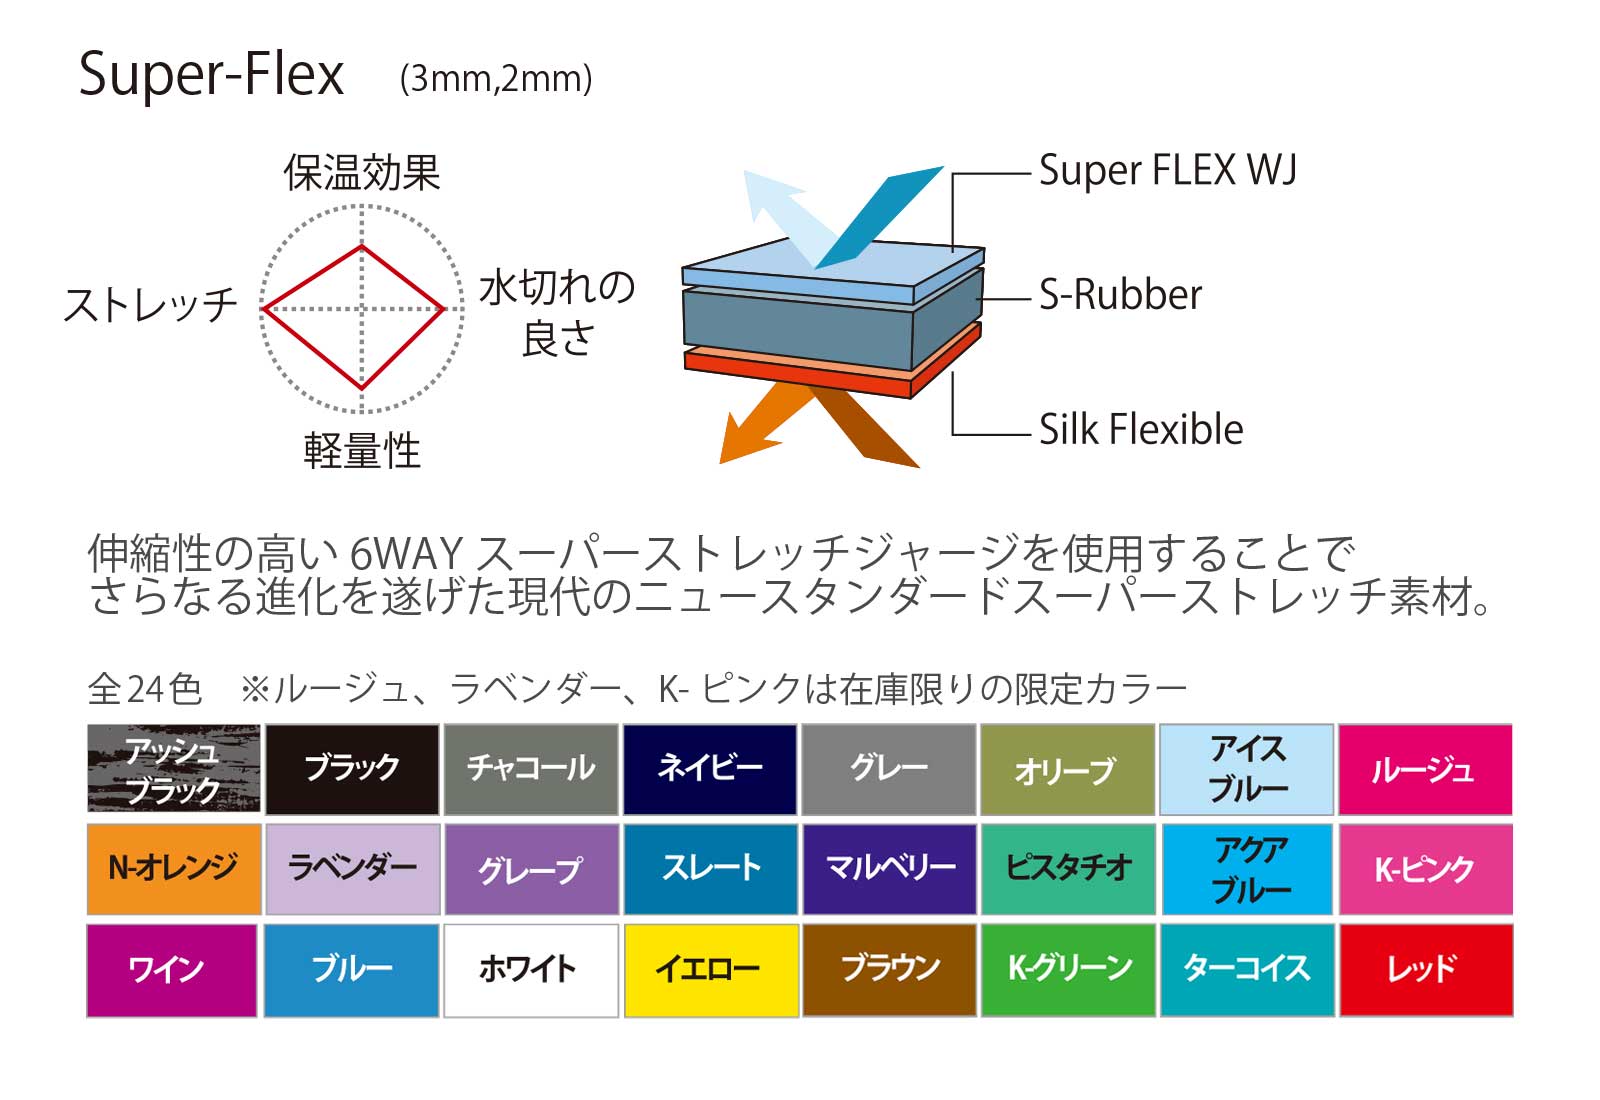 Super-Flex (3mm,2mm) 伸縮性の高い 6WAY スーパーストレッチジャージを使用することで さらなる進化を遂げた現代のニュースタンダードスーパーストレッチ素材。 全24色 ※ルージュ、ラベンダー、K- ピンクは在庫限りの限定カラー